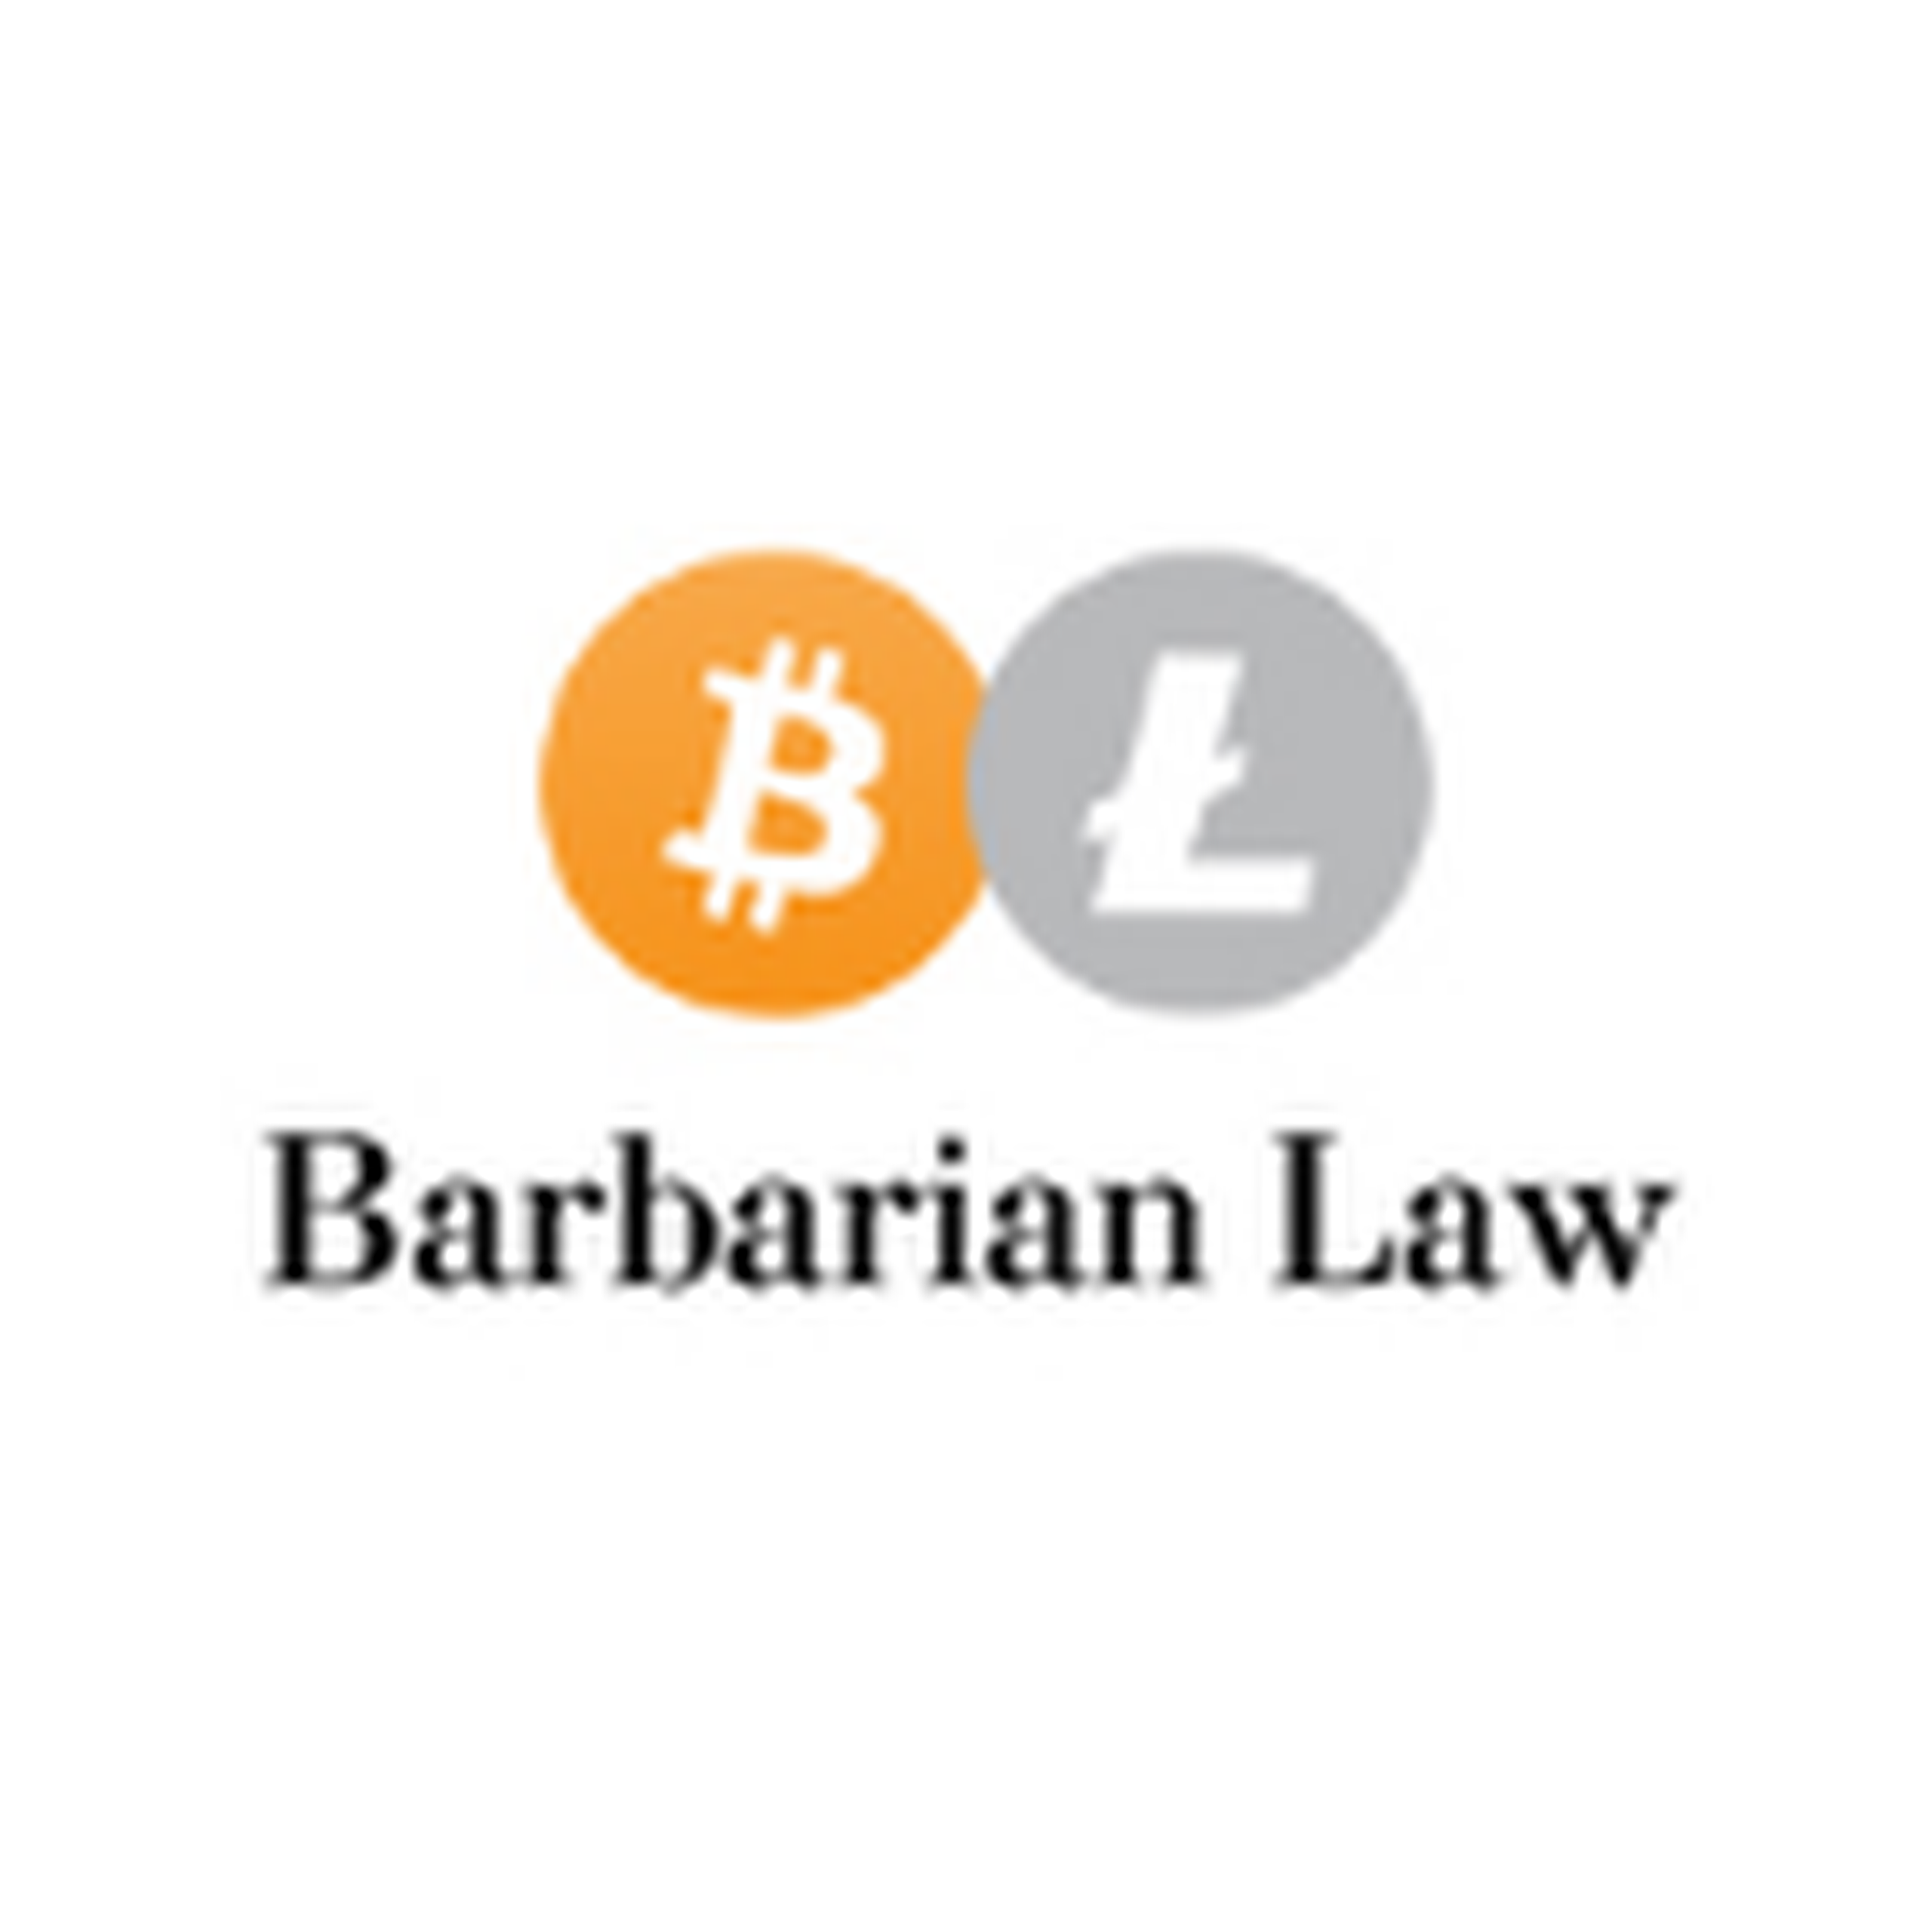 Karim Eshqoor, Business Lawyer & Transaction Advisor at Barbarian Law - Testimonial